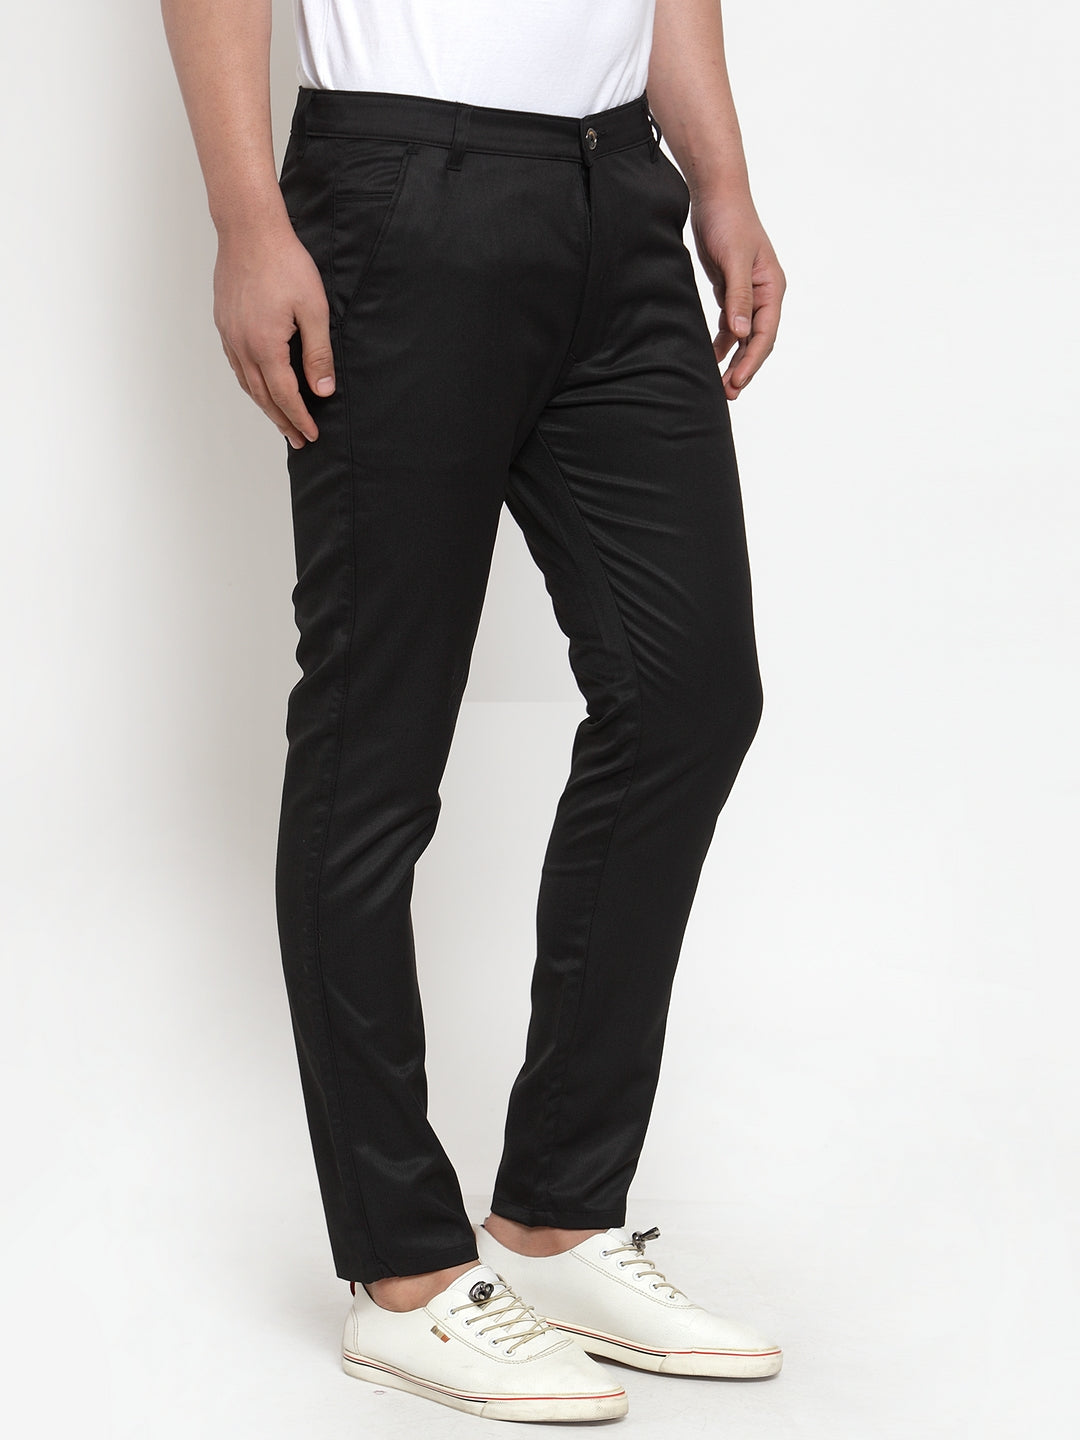 Men's Black Solid Formal Trousers ( FGP 253Black ) - Jainish